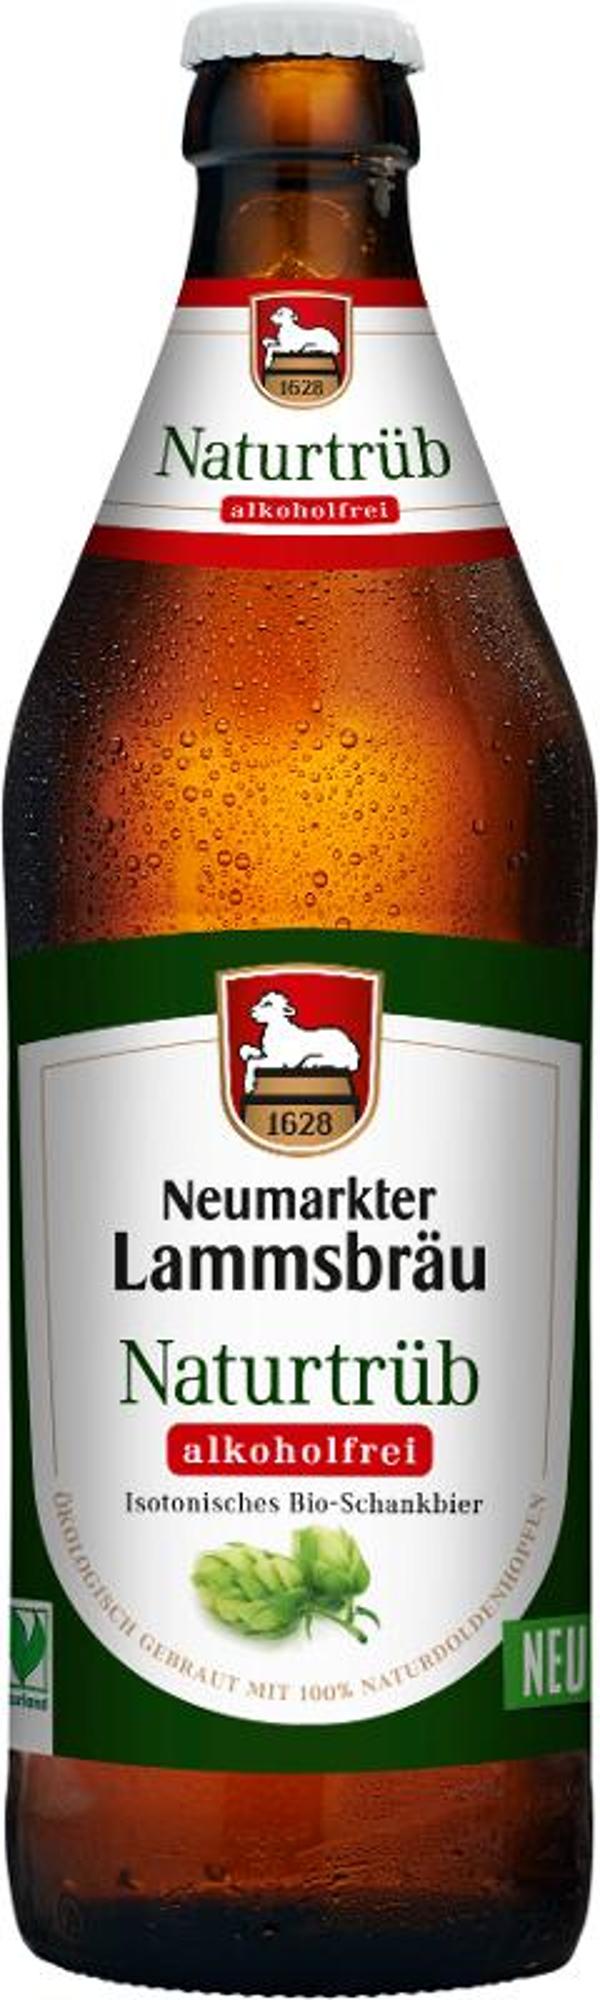 Produktfoto zu Lammsbräu Naturtrüb alkoholfrei 0,5l Neumarkter Lammsbräu